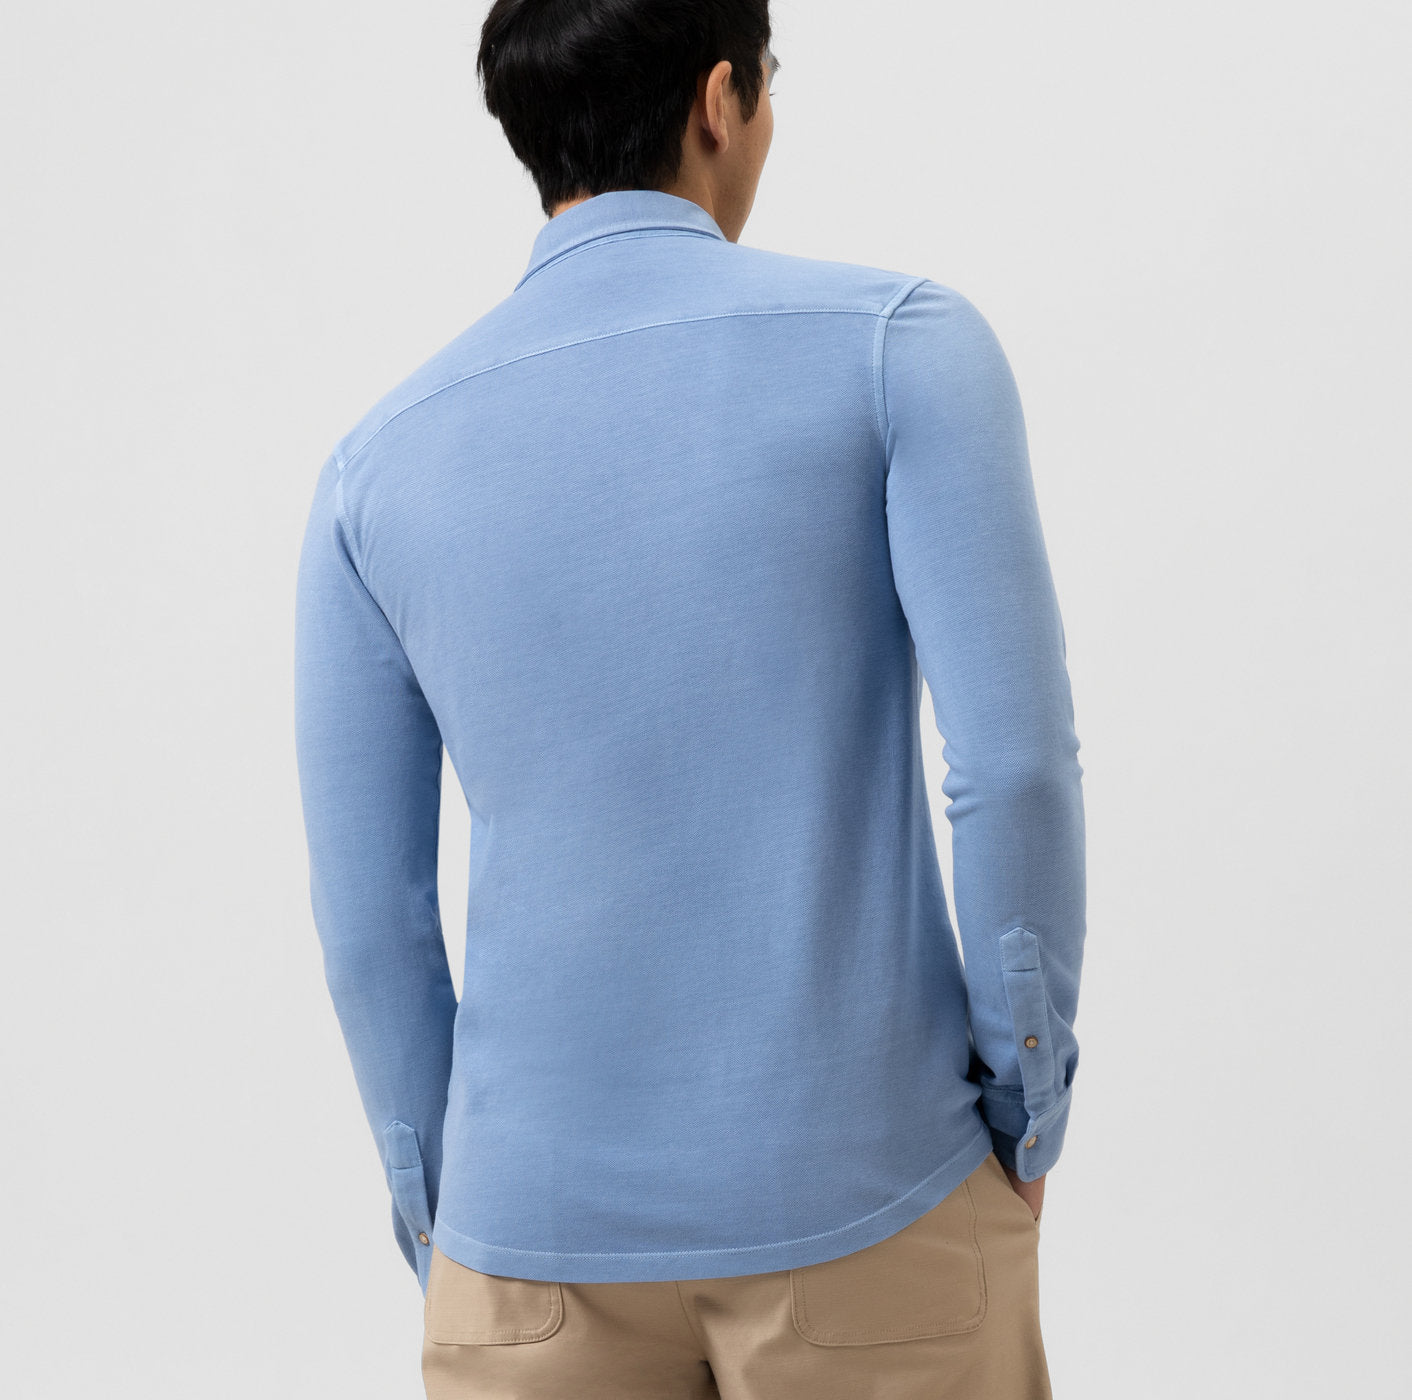 PoloShirt - Bleu - Body fit - Casual